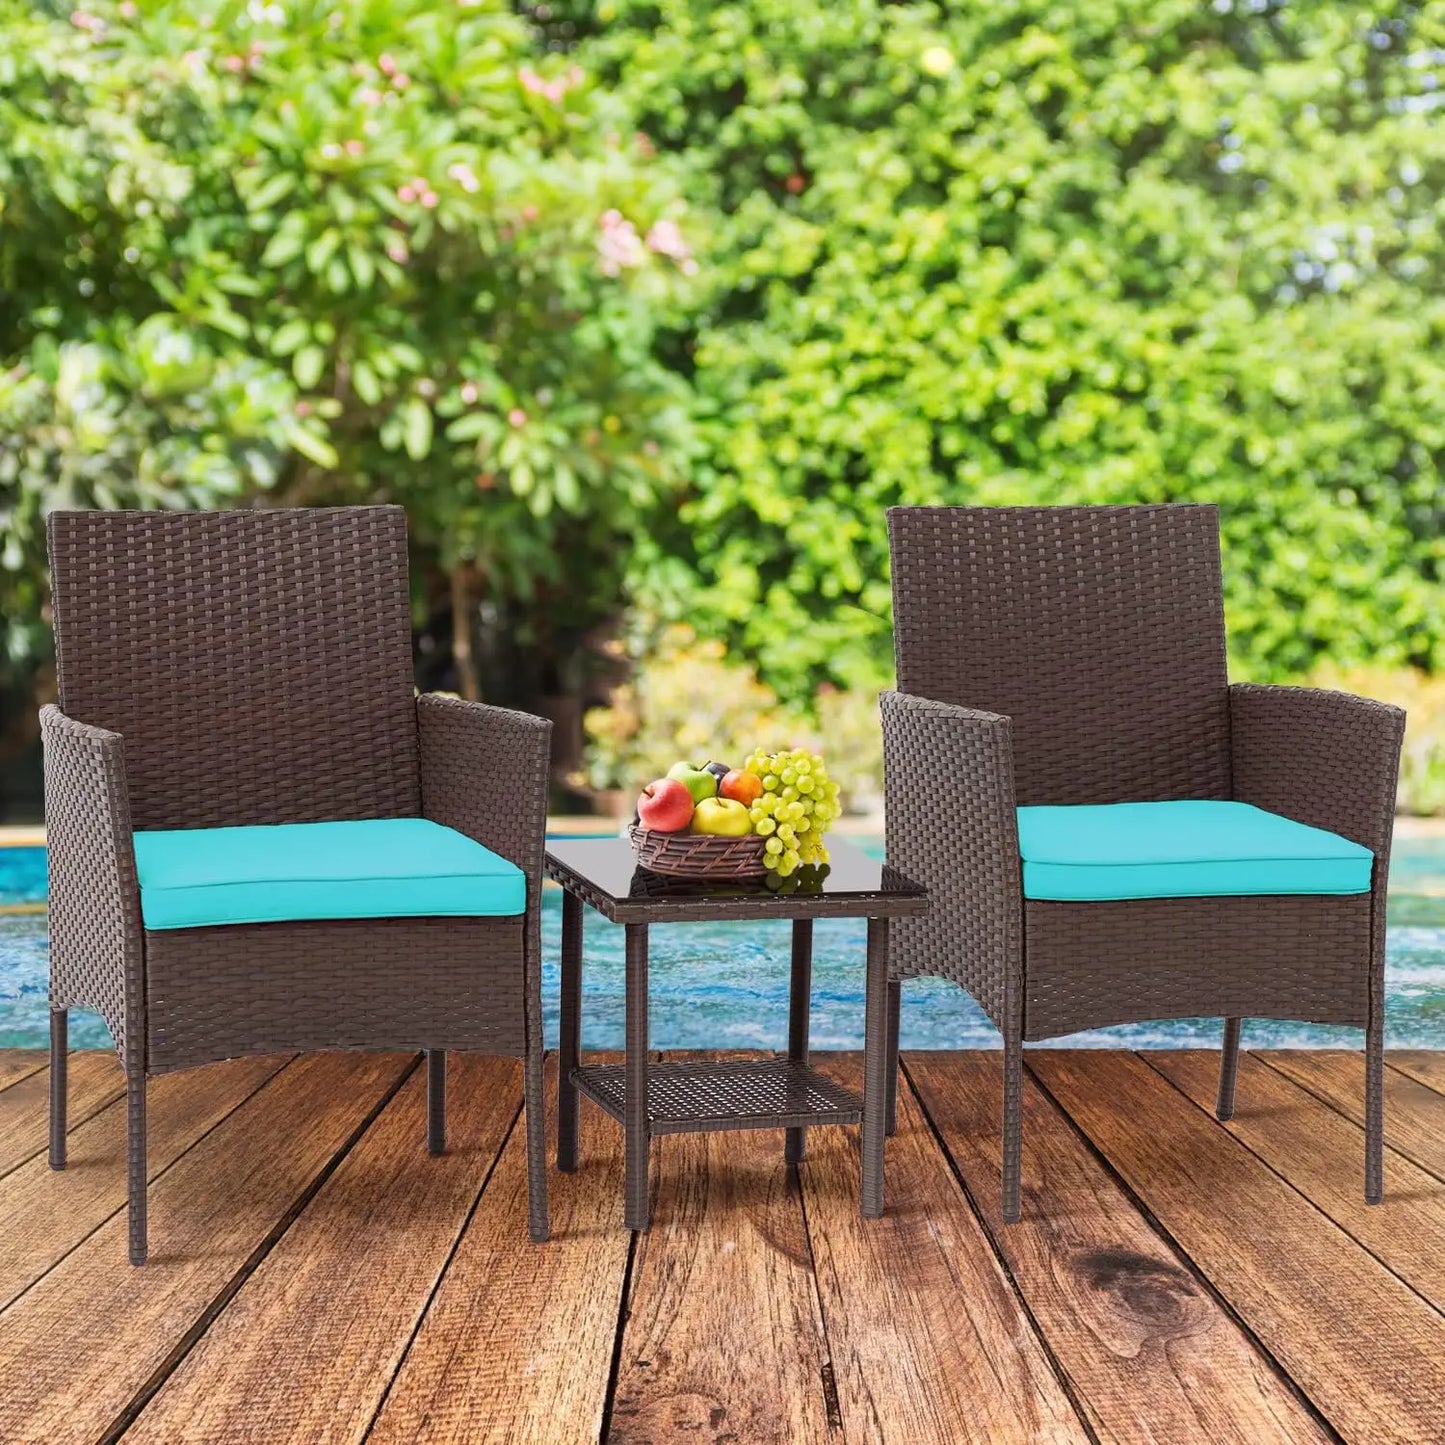 Patio 3/4 Pieces Rattan Wicker Conversation Sets Lawn Chairs Porch Poolside Balcony Garden Outdoor Furniture